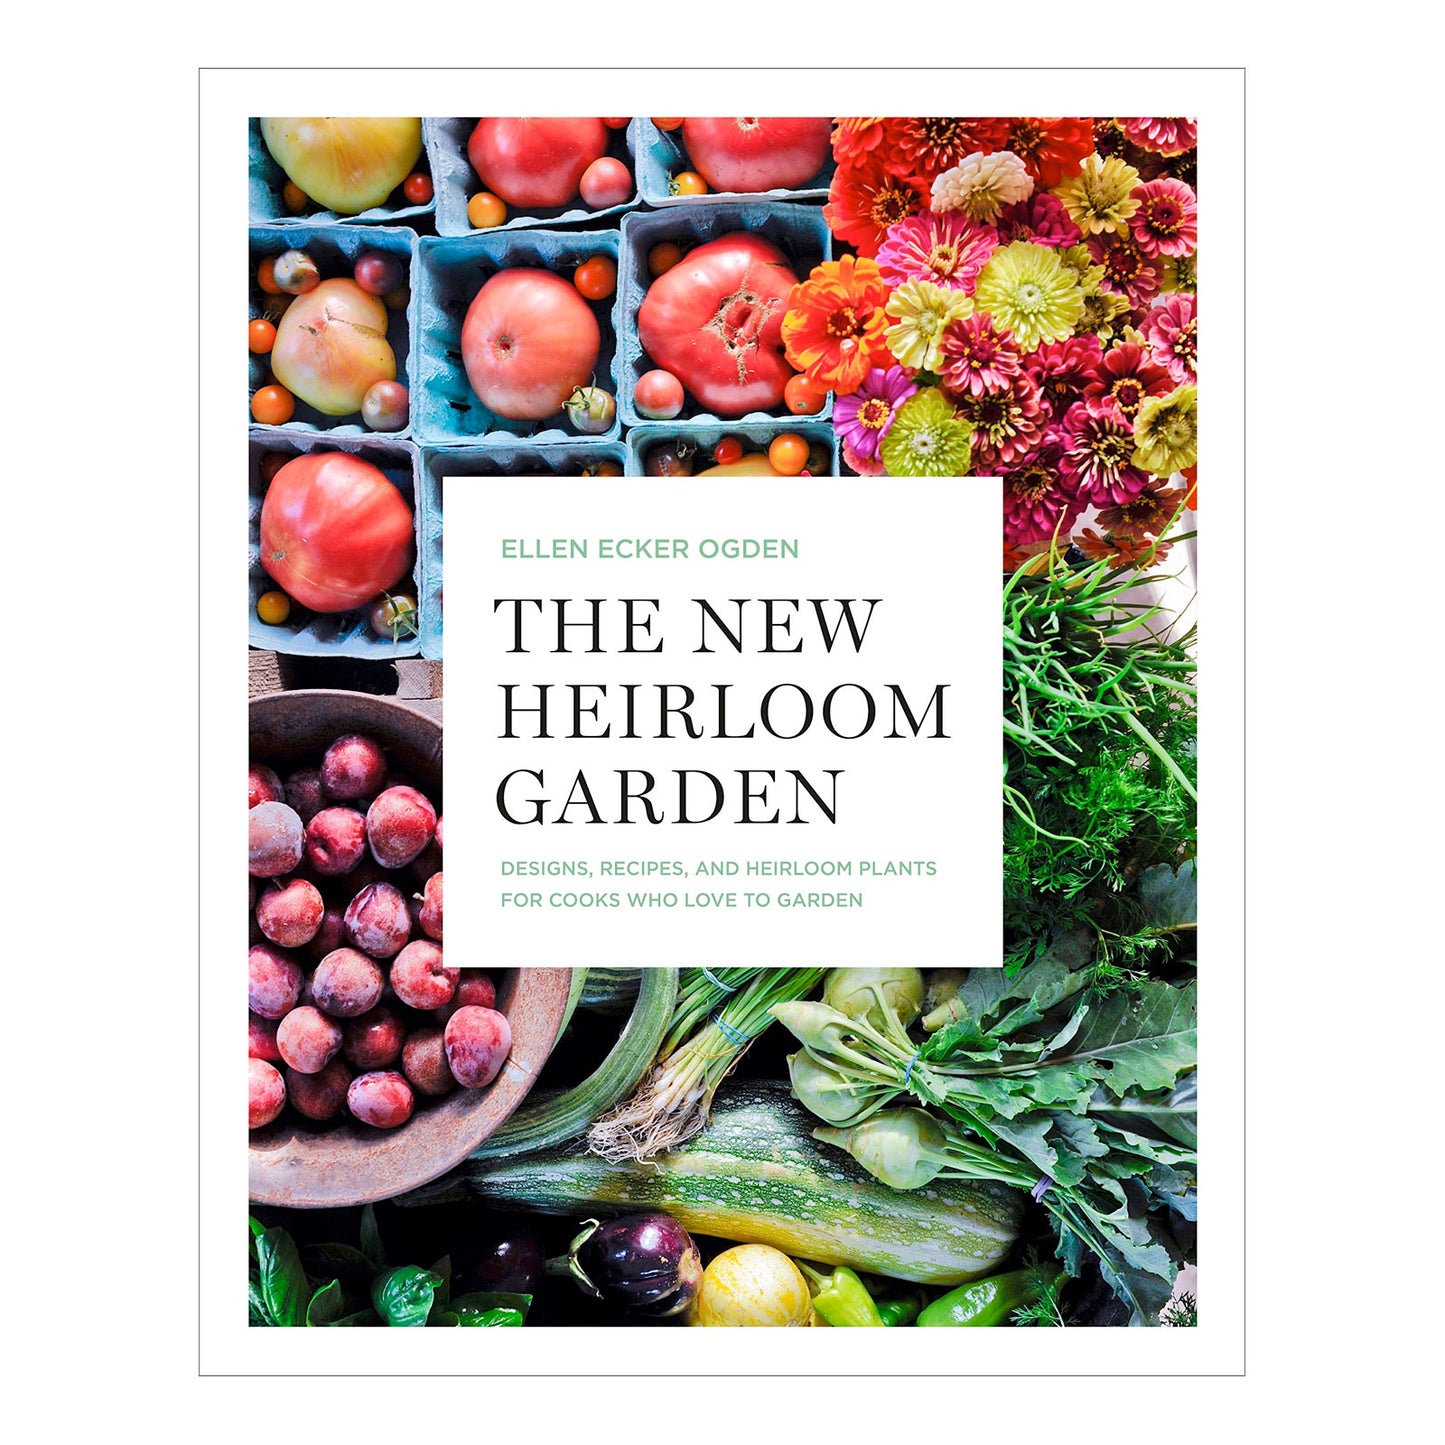 The New Heirloom Garden by Ellen Ecker Ogden